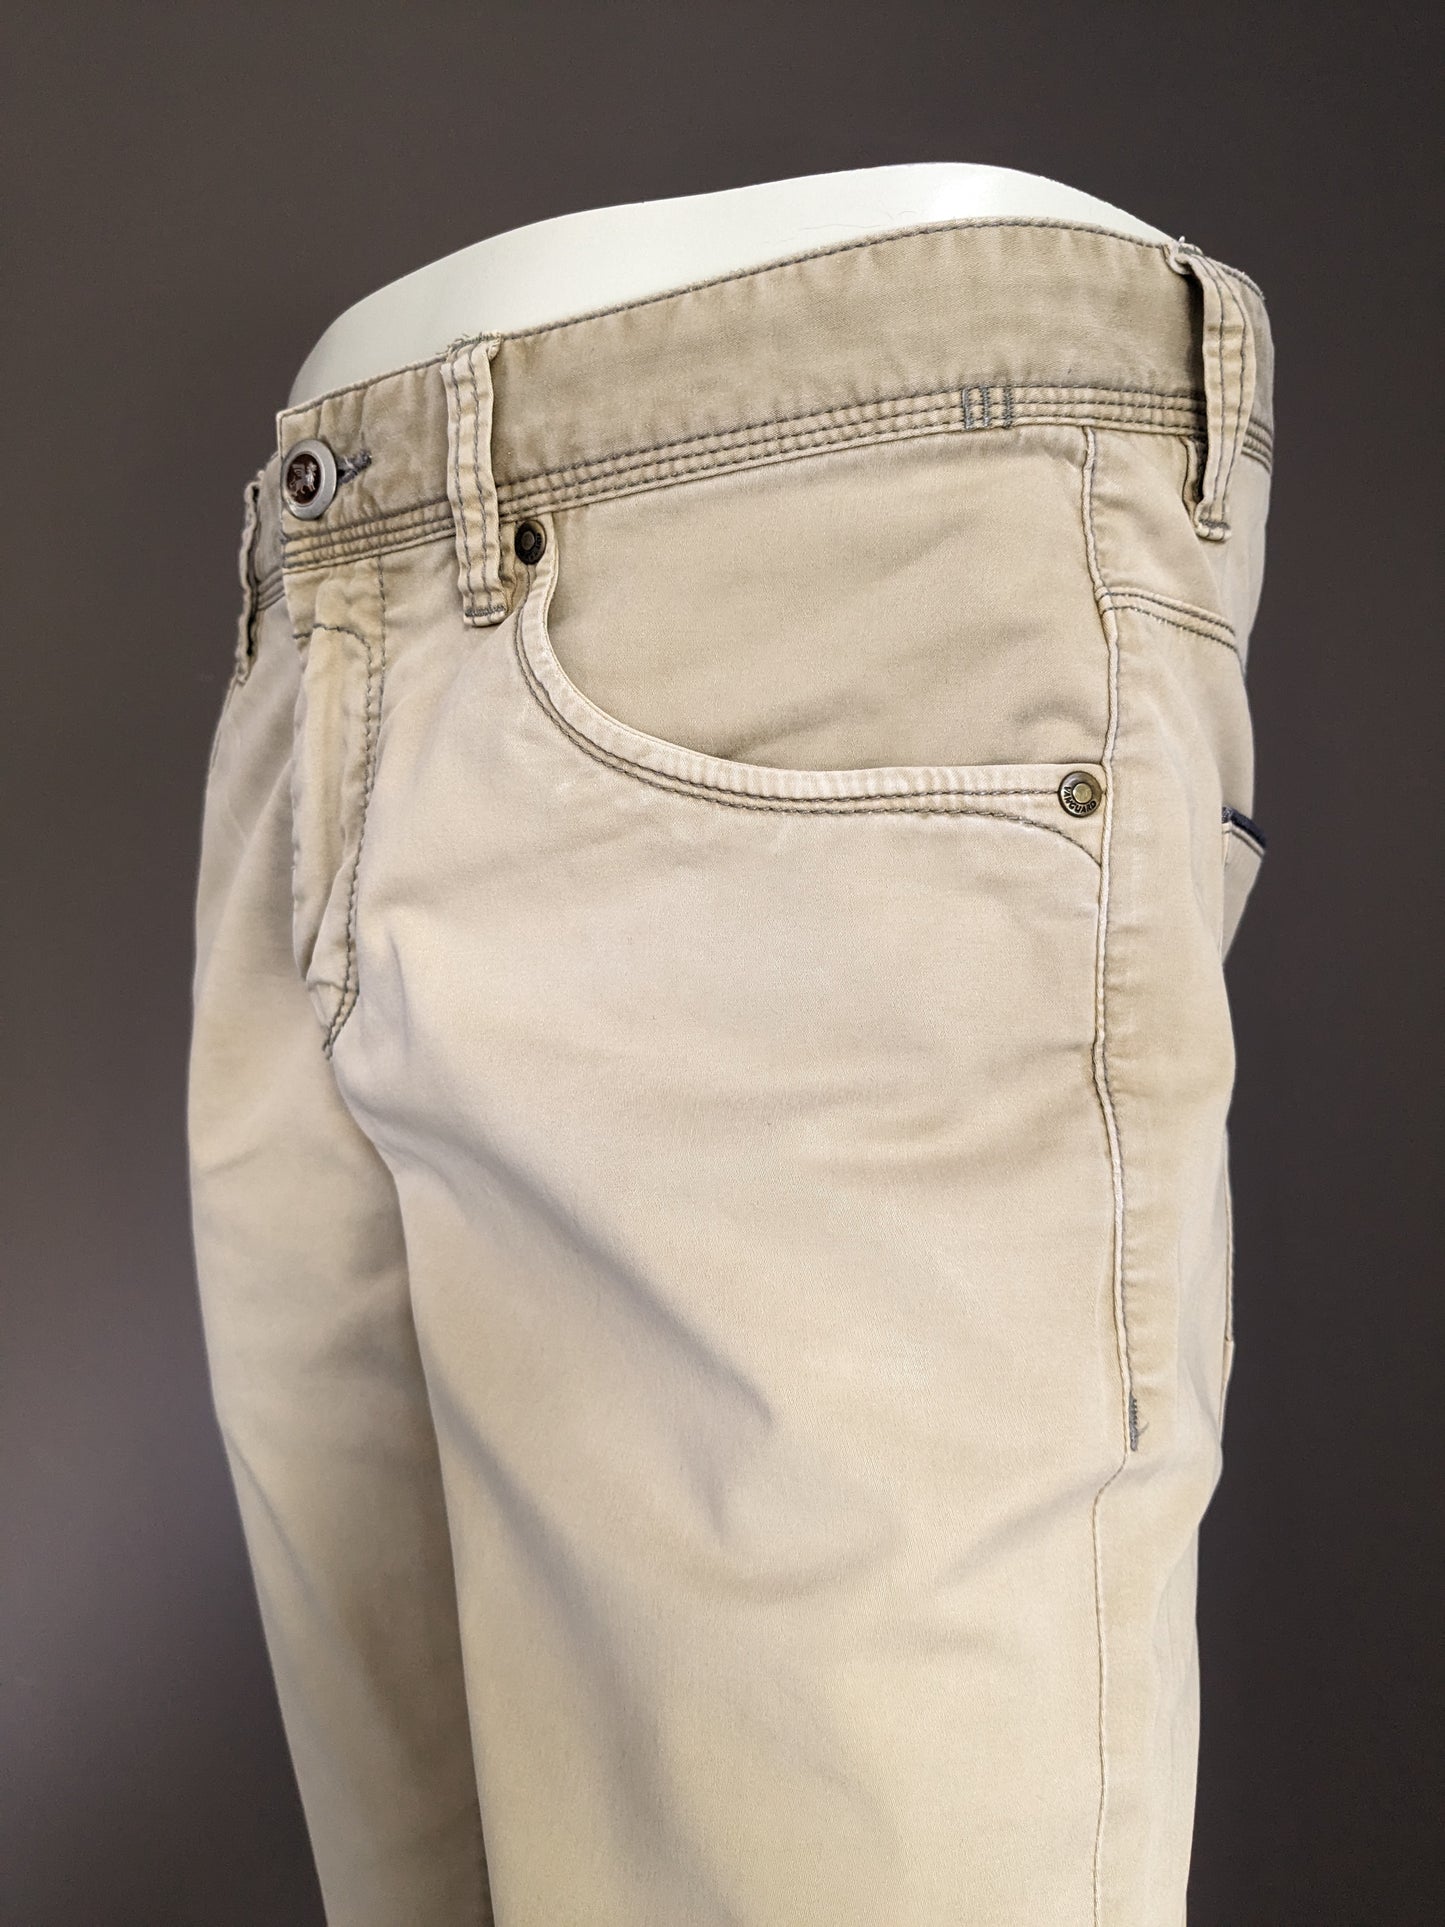 Pantalones de vanguardia. Color beige. Tamaño W31 - L32.